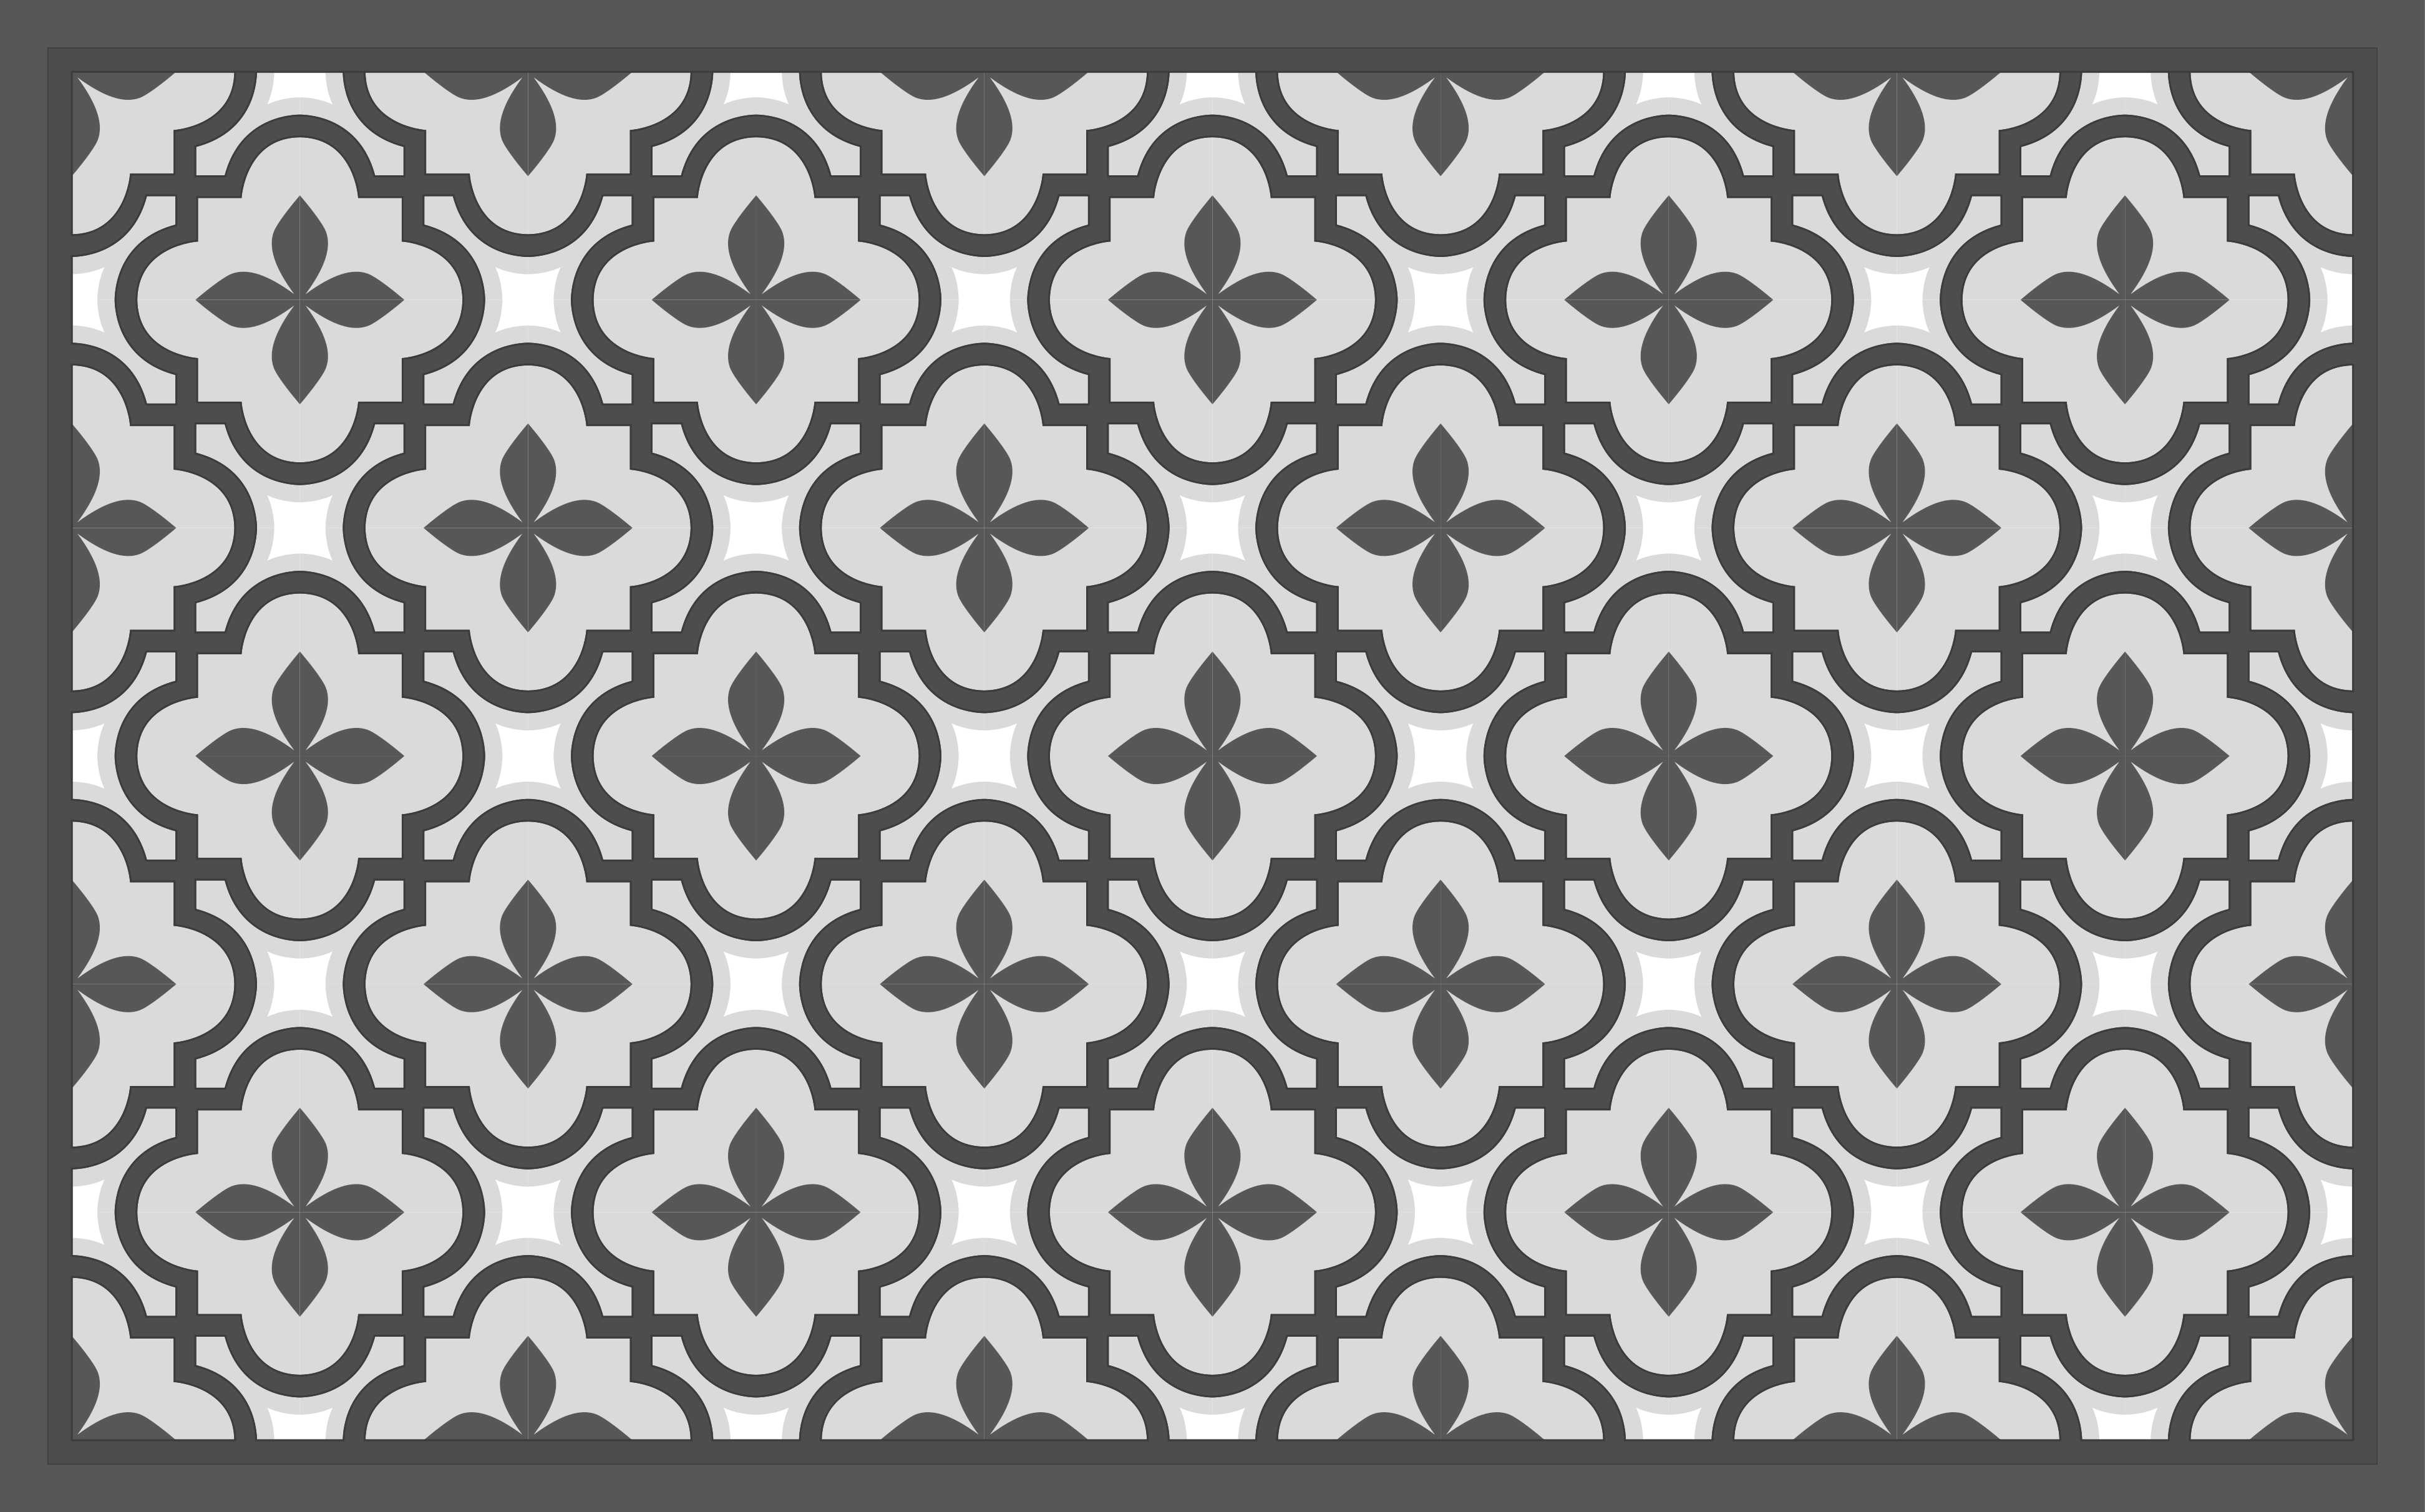 Black and white tiles pattern tile mat - TenStickers